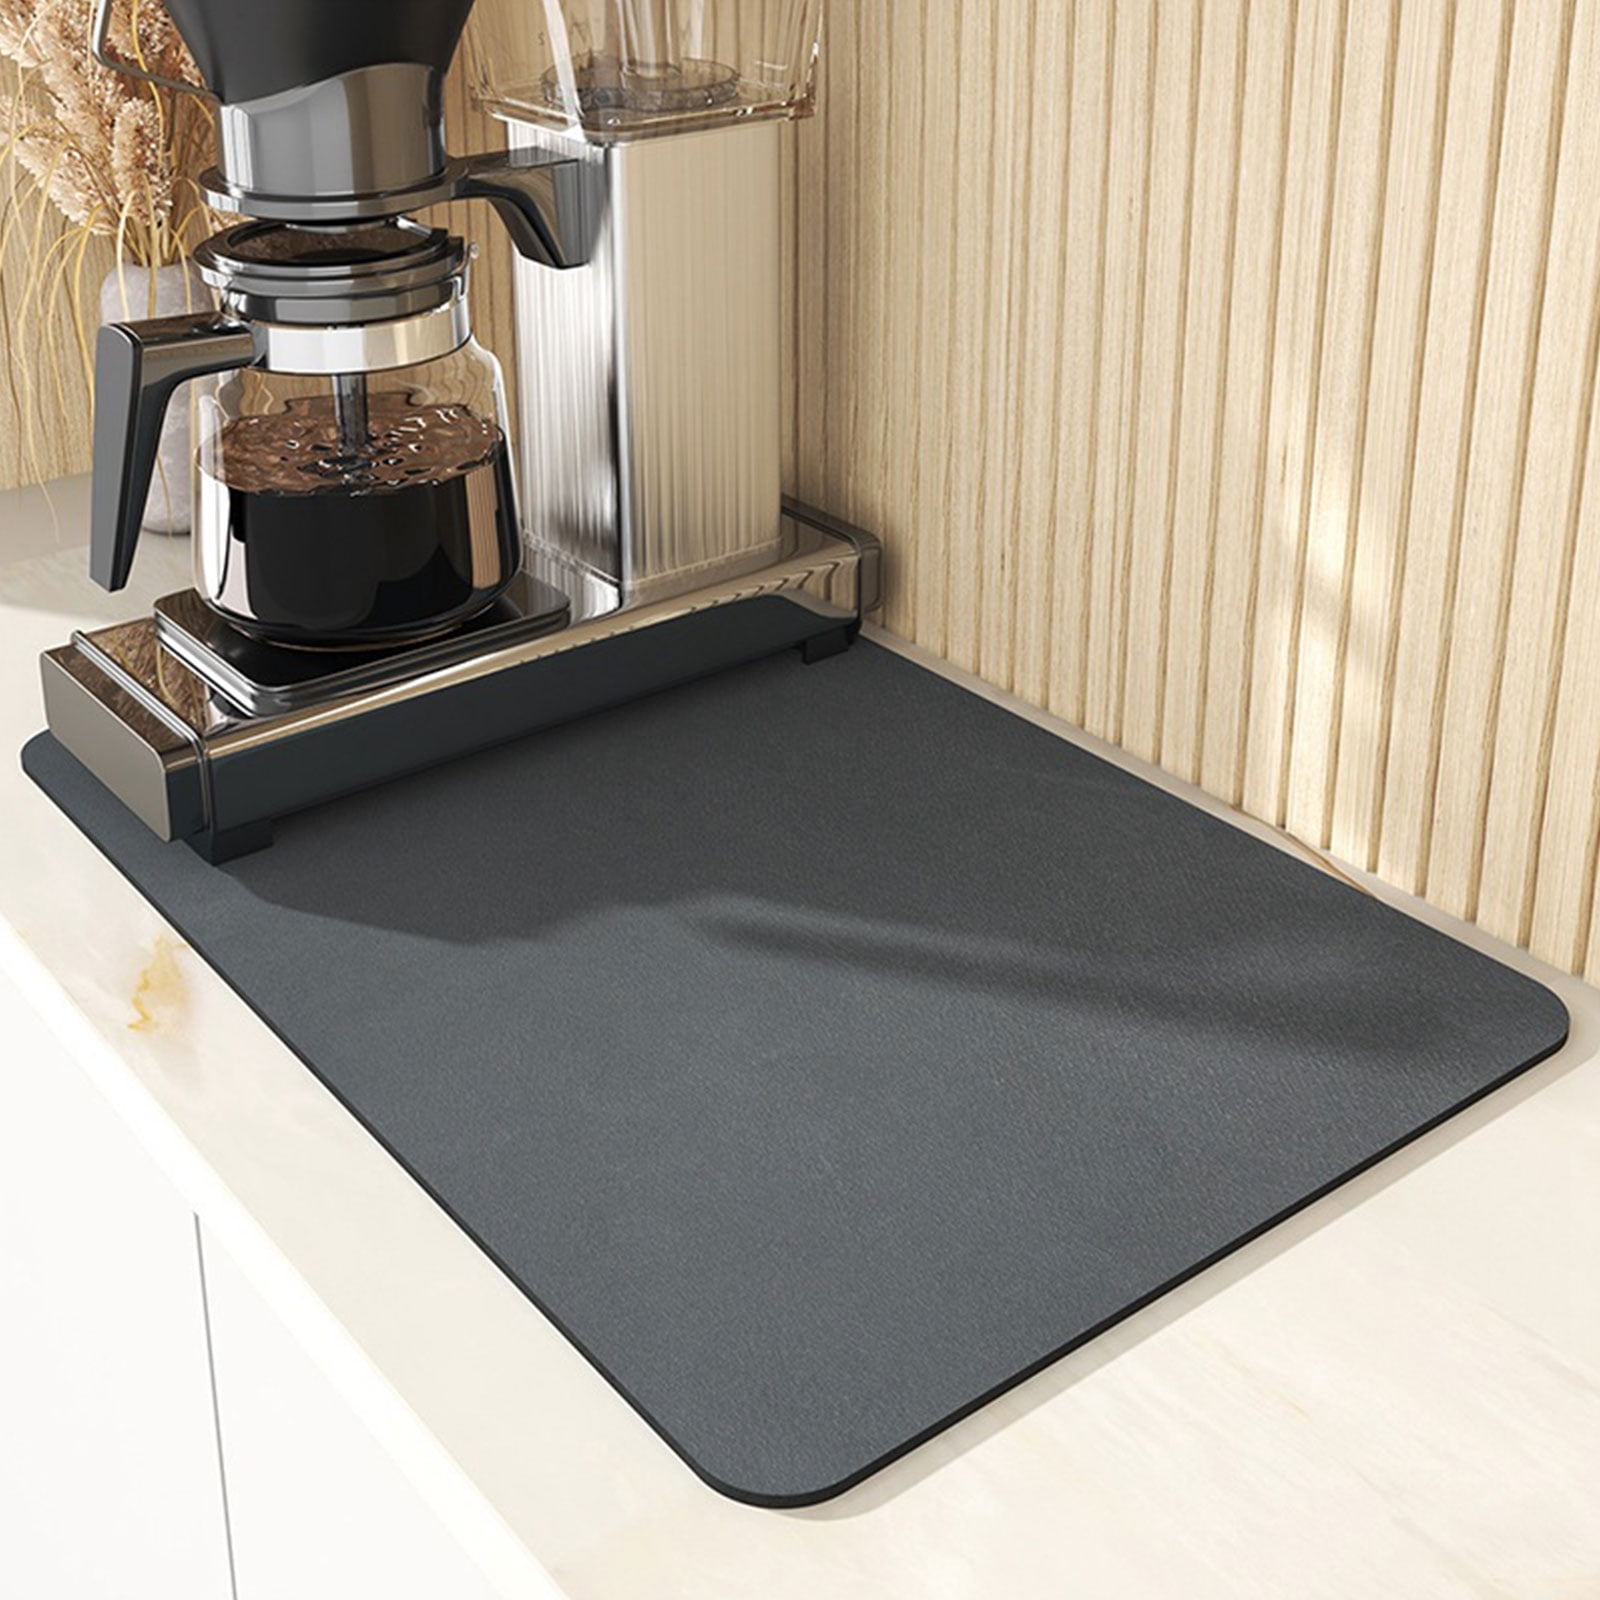 Xinlie Coffee Machine Drying Mat, Quick Drying Drying Mat, Dishes, Absorbent Drying Mat for Coffee Machine, Kitchen, Sink, Beige, 16x20inch, Size: 16 x 20